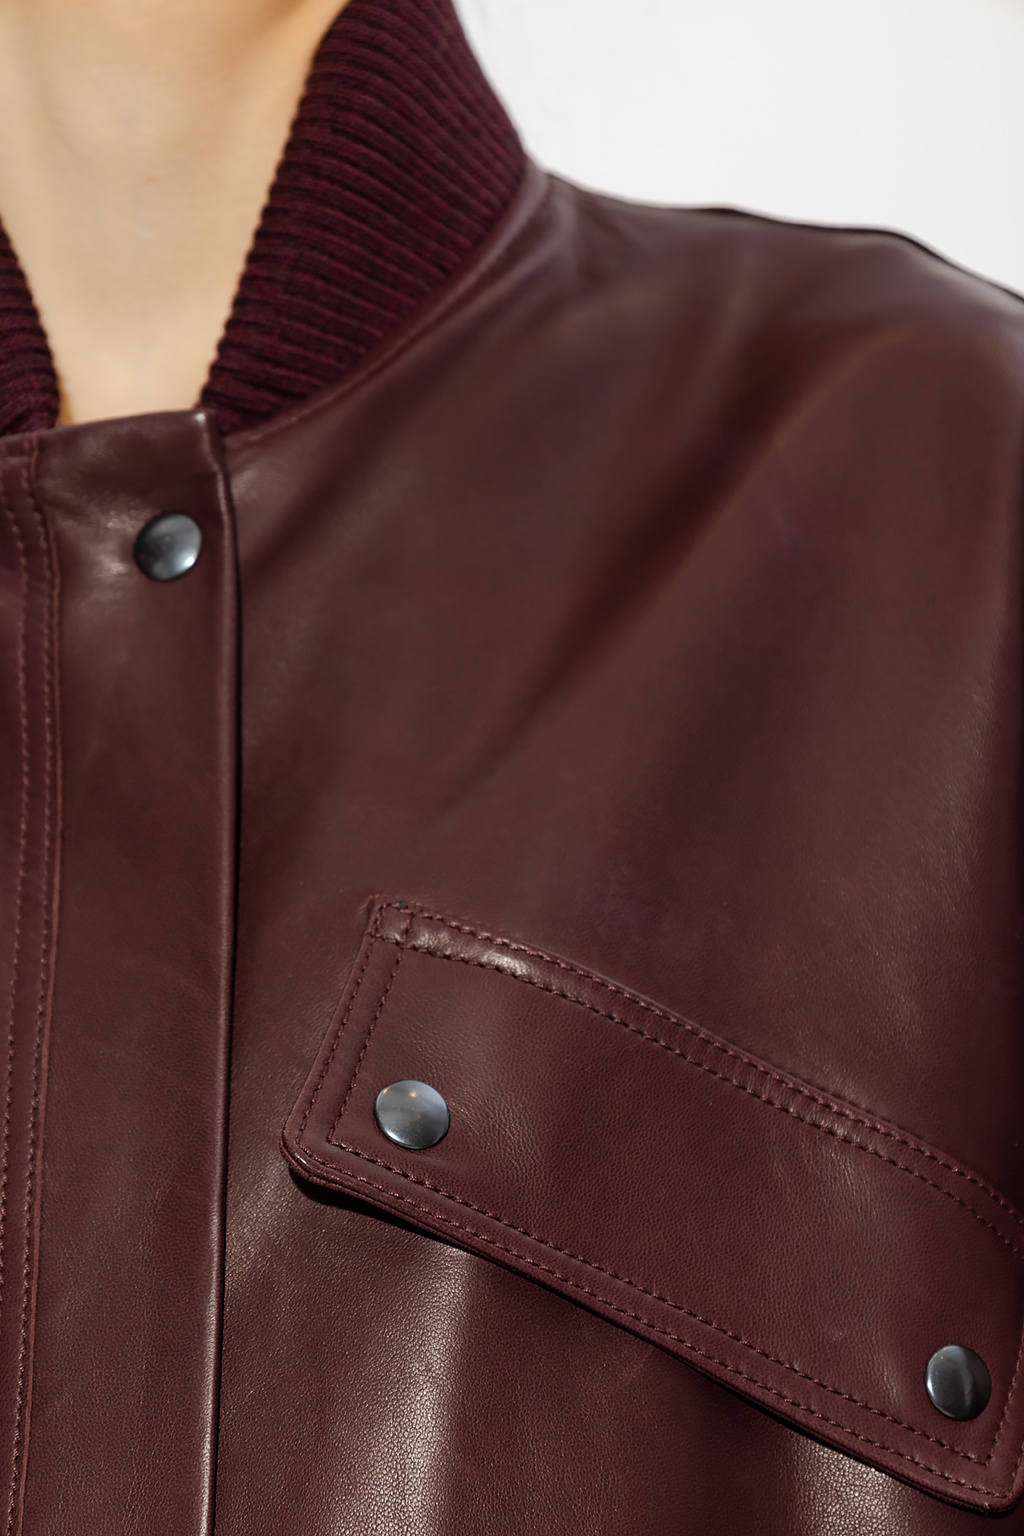 Canada Goose panelled zip-up sweatshirt ‘Money’ leather jacket